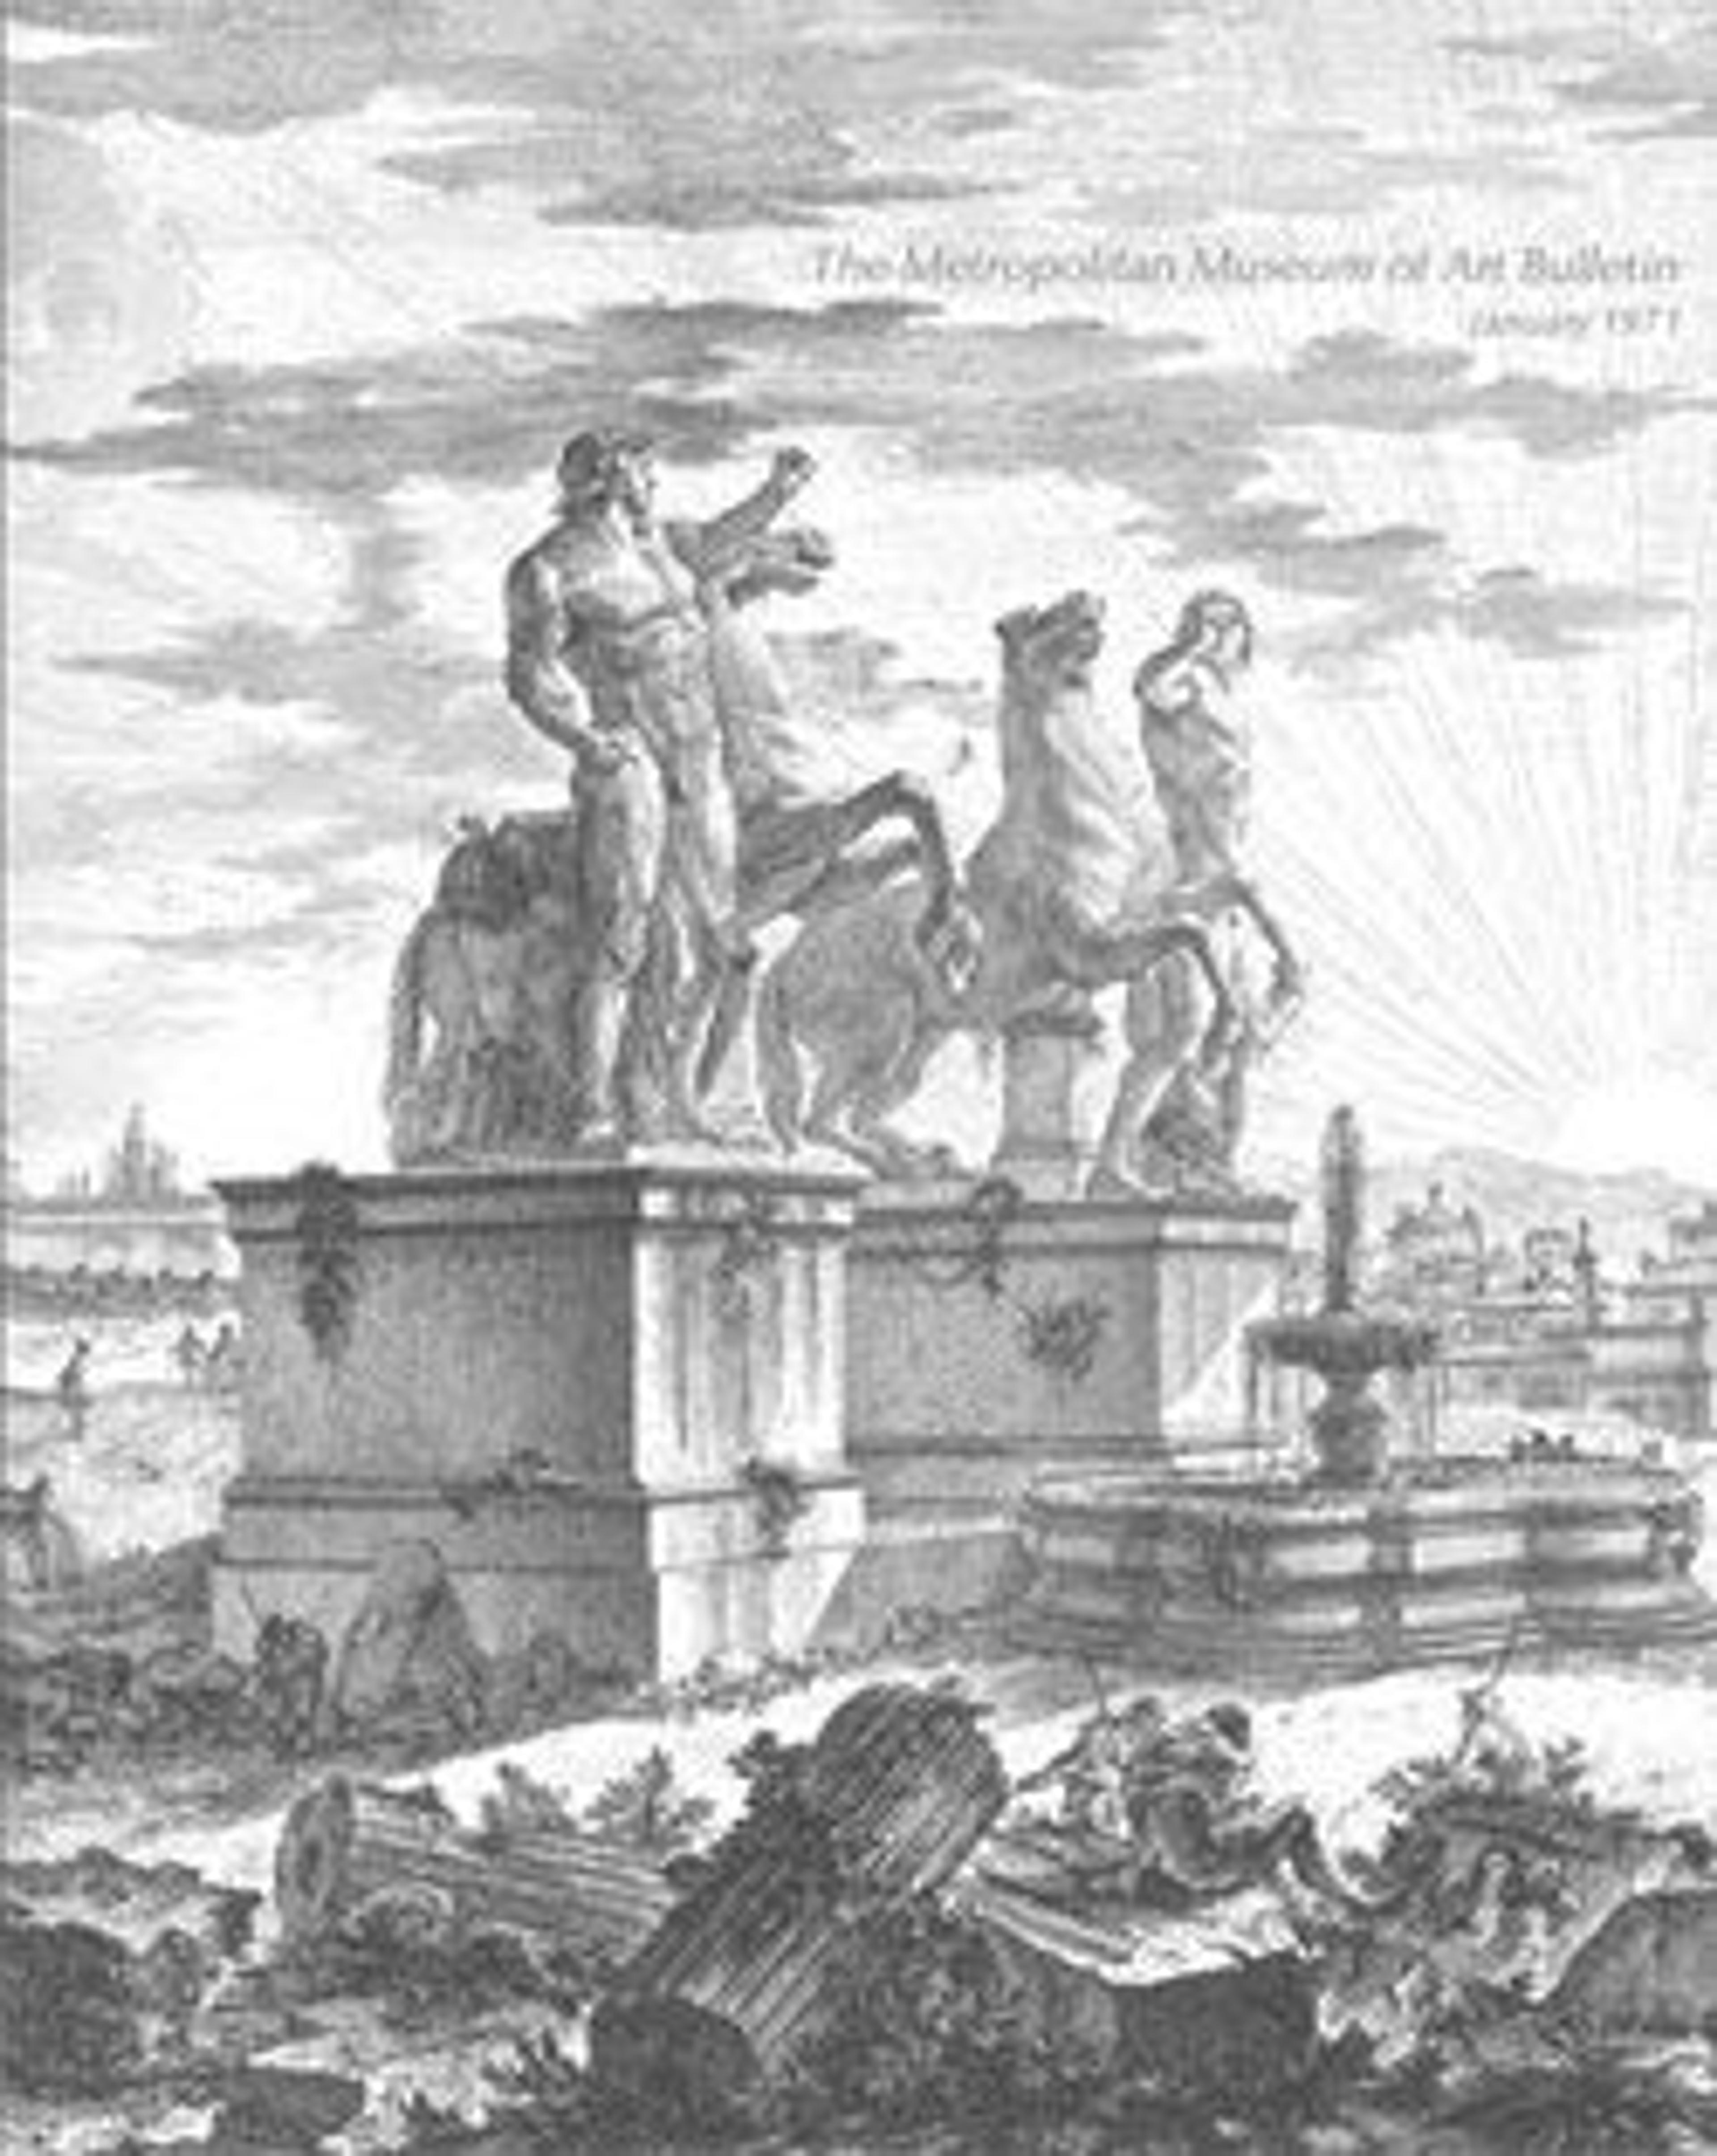 "Eighteenth-Century Italian Draughtsmen": The Metropolitan Museum of Art Bulletin, v. 29, no. 5 (January, 1971)